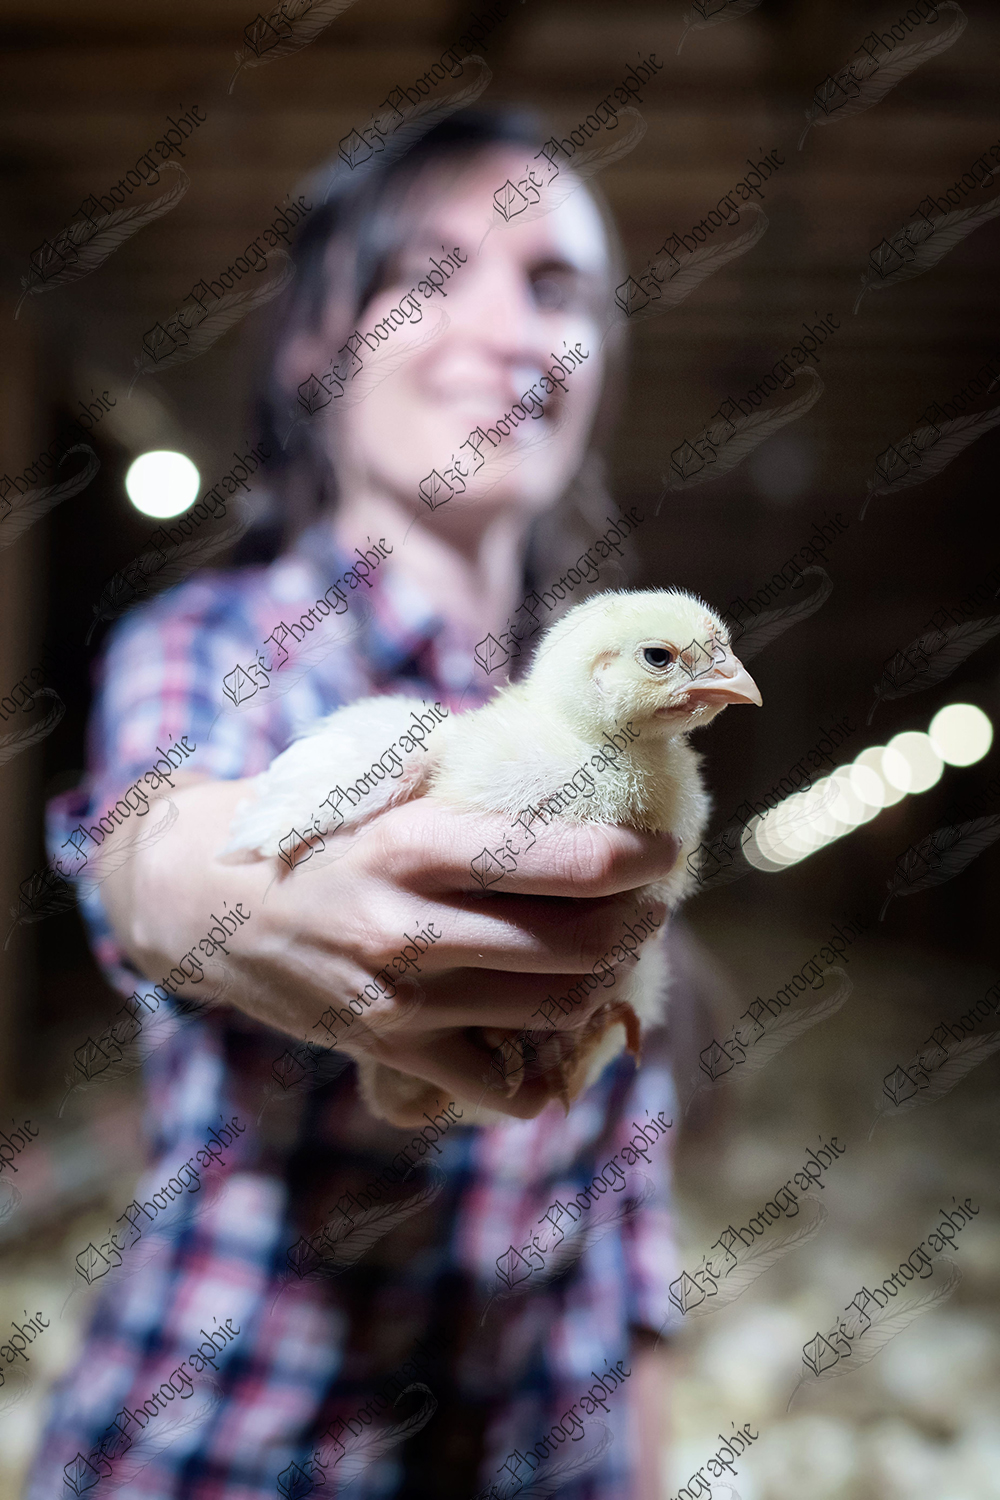 elze_photo_9195_poulet_griller_agriculture_broiler_chicken_farm